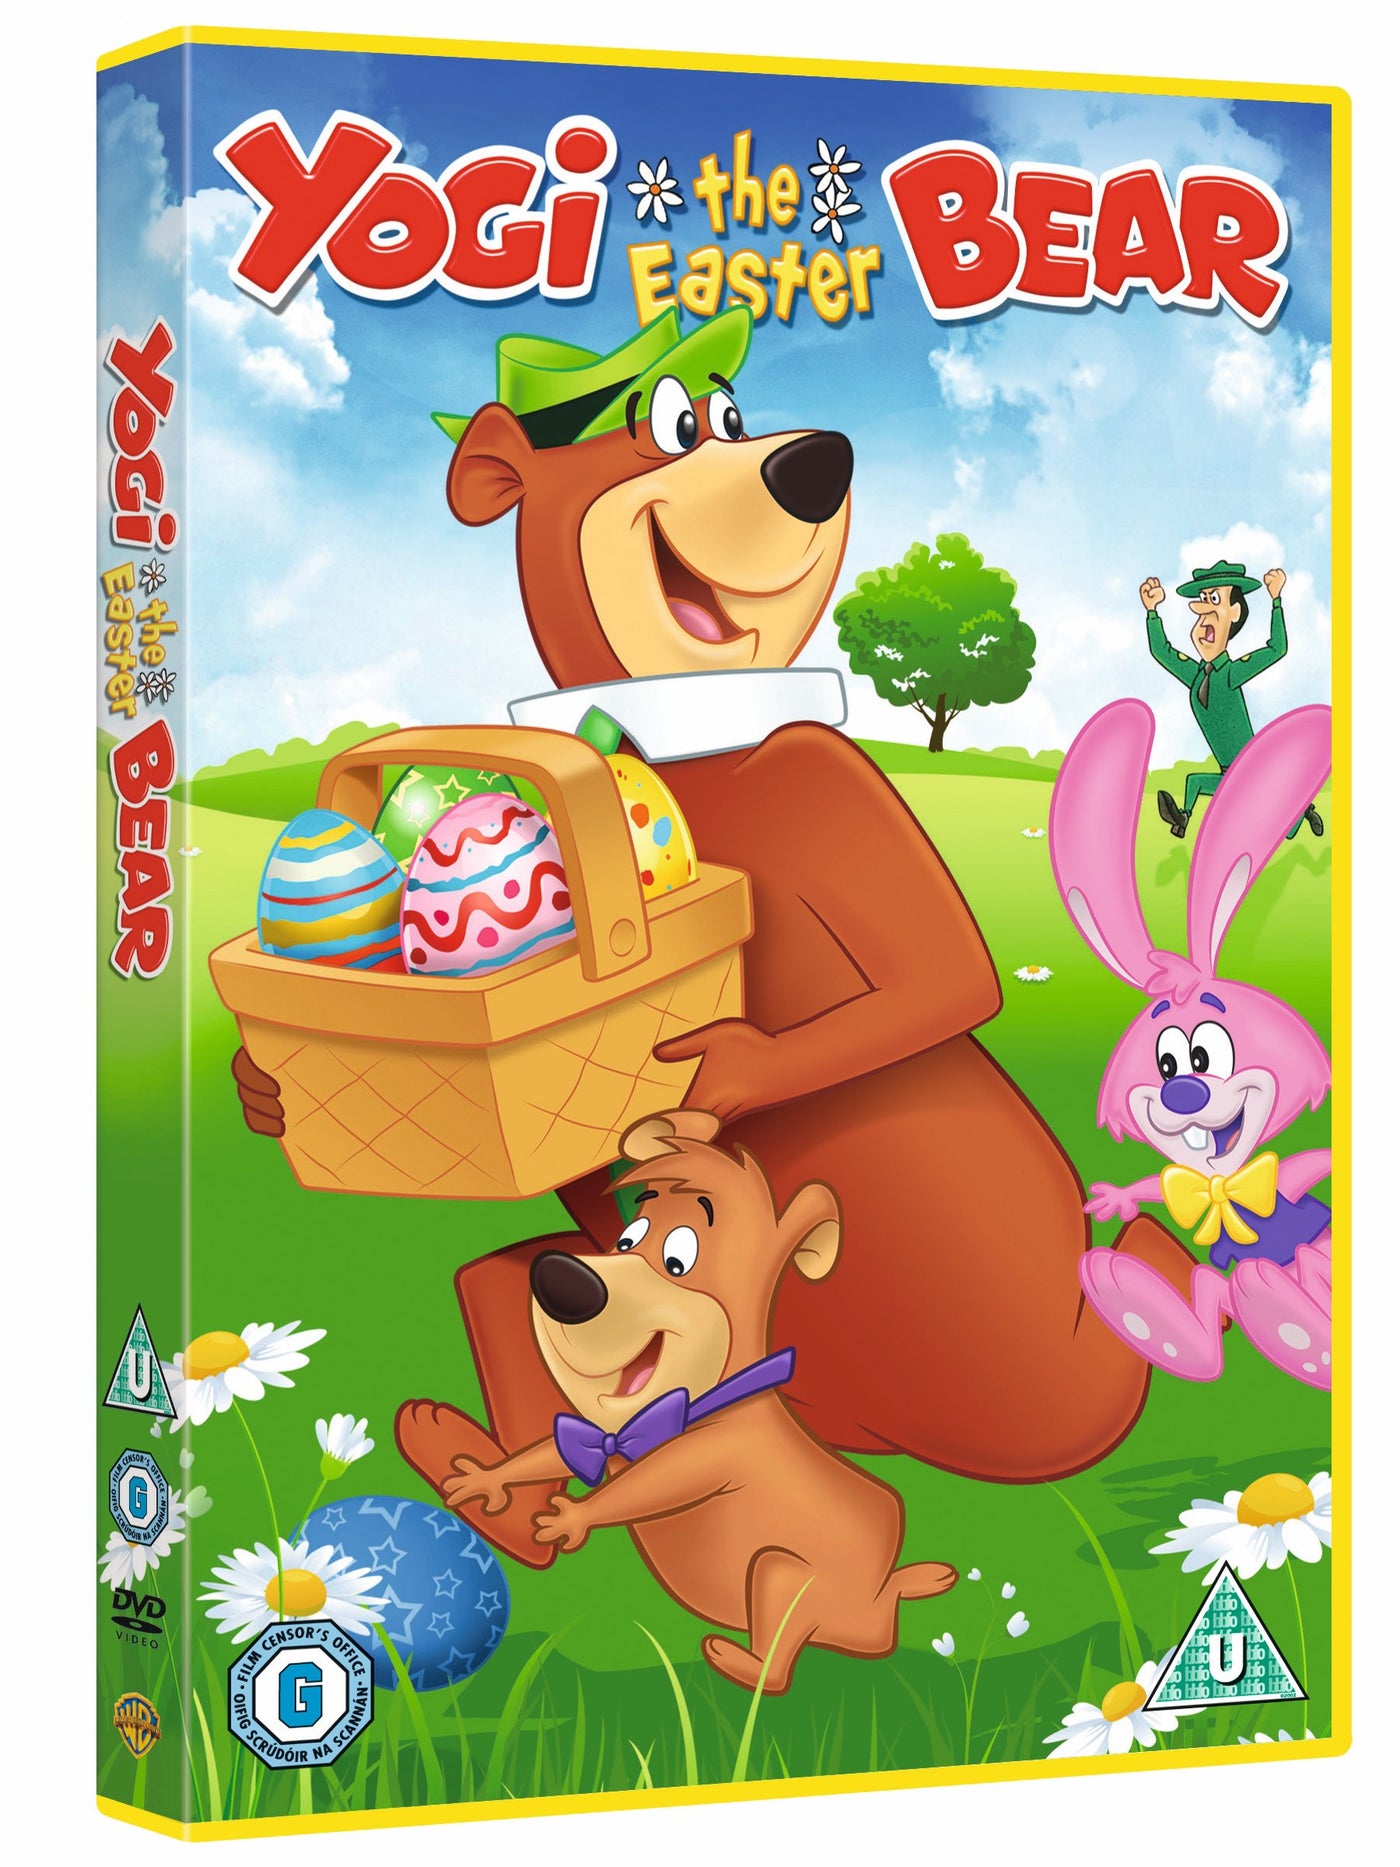 Yogi The Easter Bear [2009] (DVD)